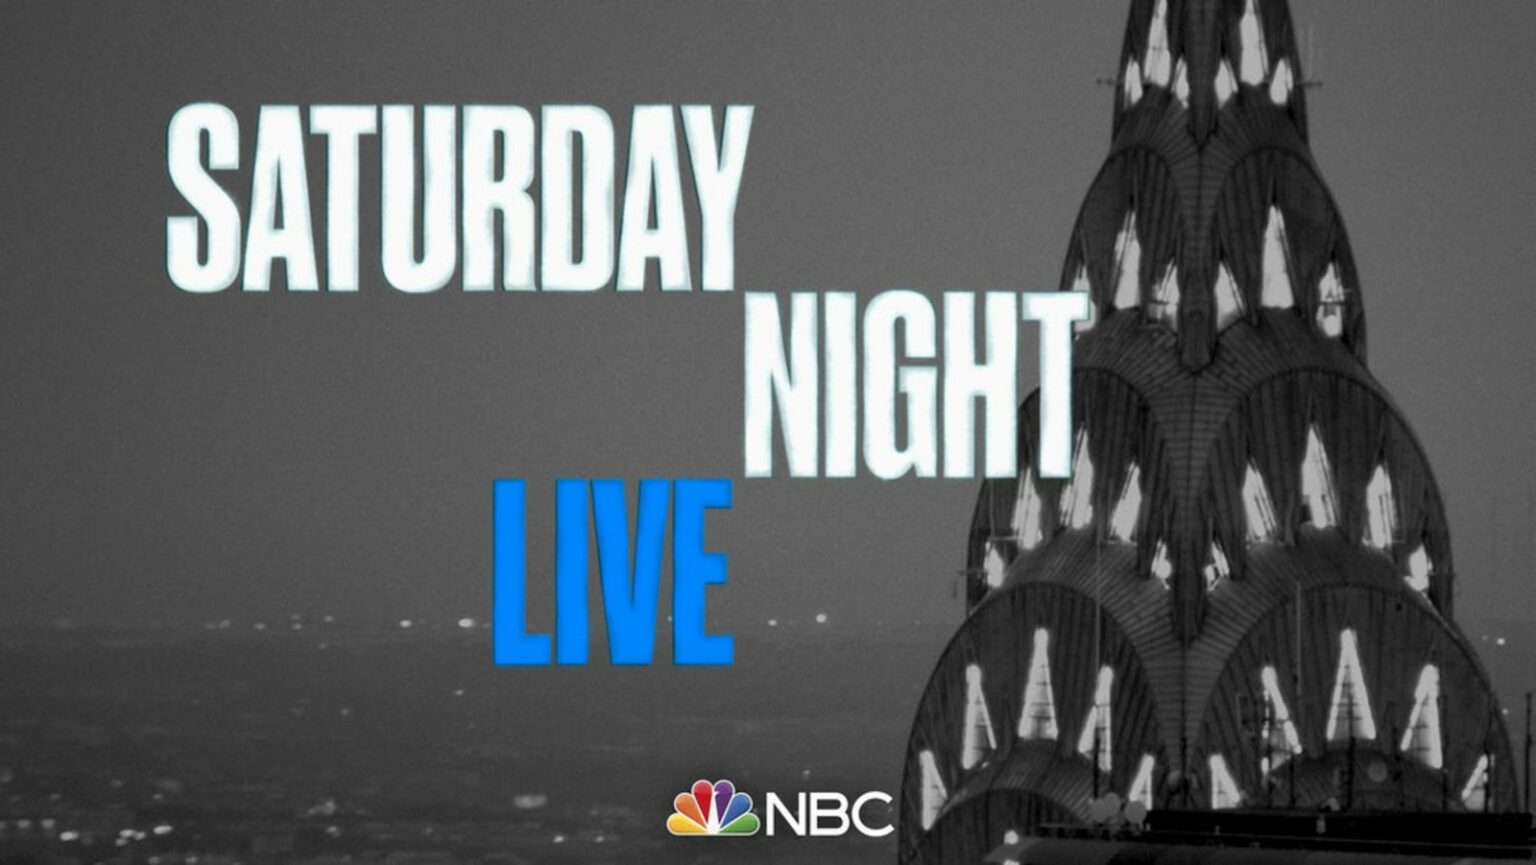 Meet The New Saturday Night Live Cast Members